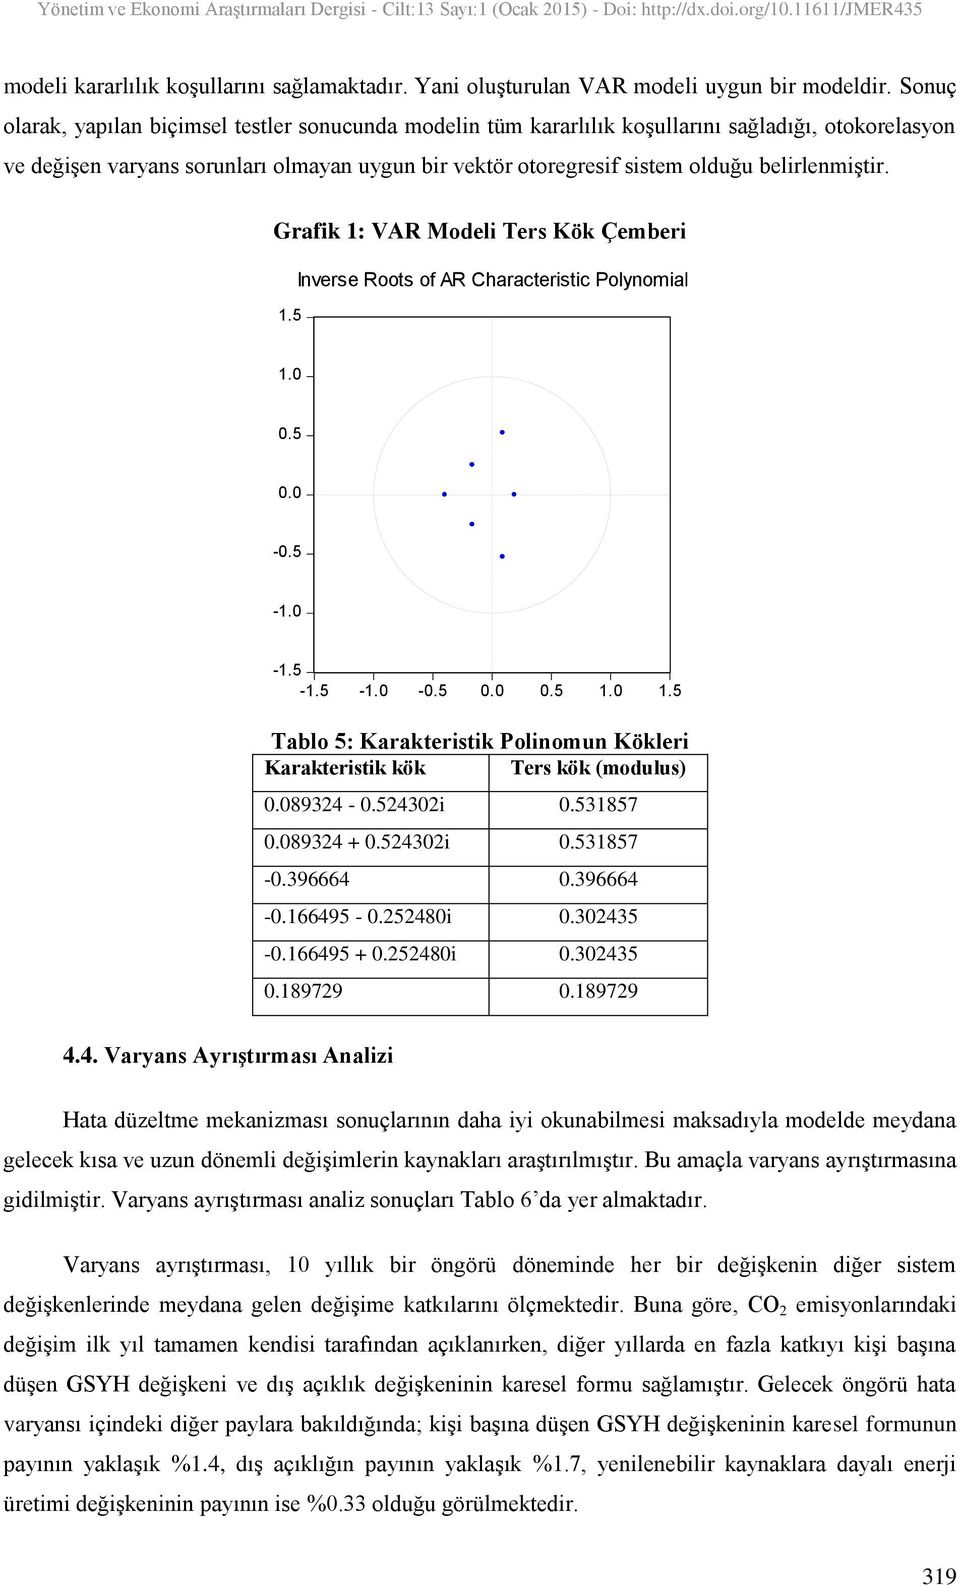 belirlenmiştir. Grafik 1: VAR Modeli Ters Kök Çemberi 1.5 Inverse Roots of AR Characteristic Polynomial 1.0 0.5 0.0-0.5-1.0-1.5-1.5-1.0-0.5 0.0 0.5 1.0 1.